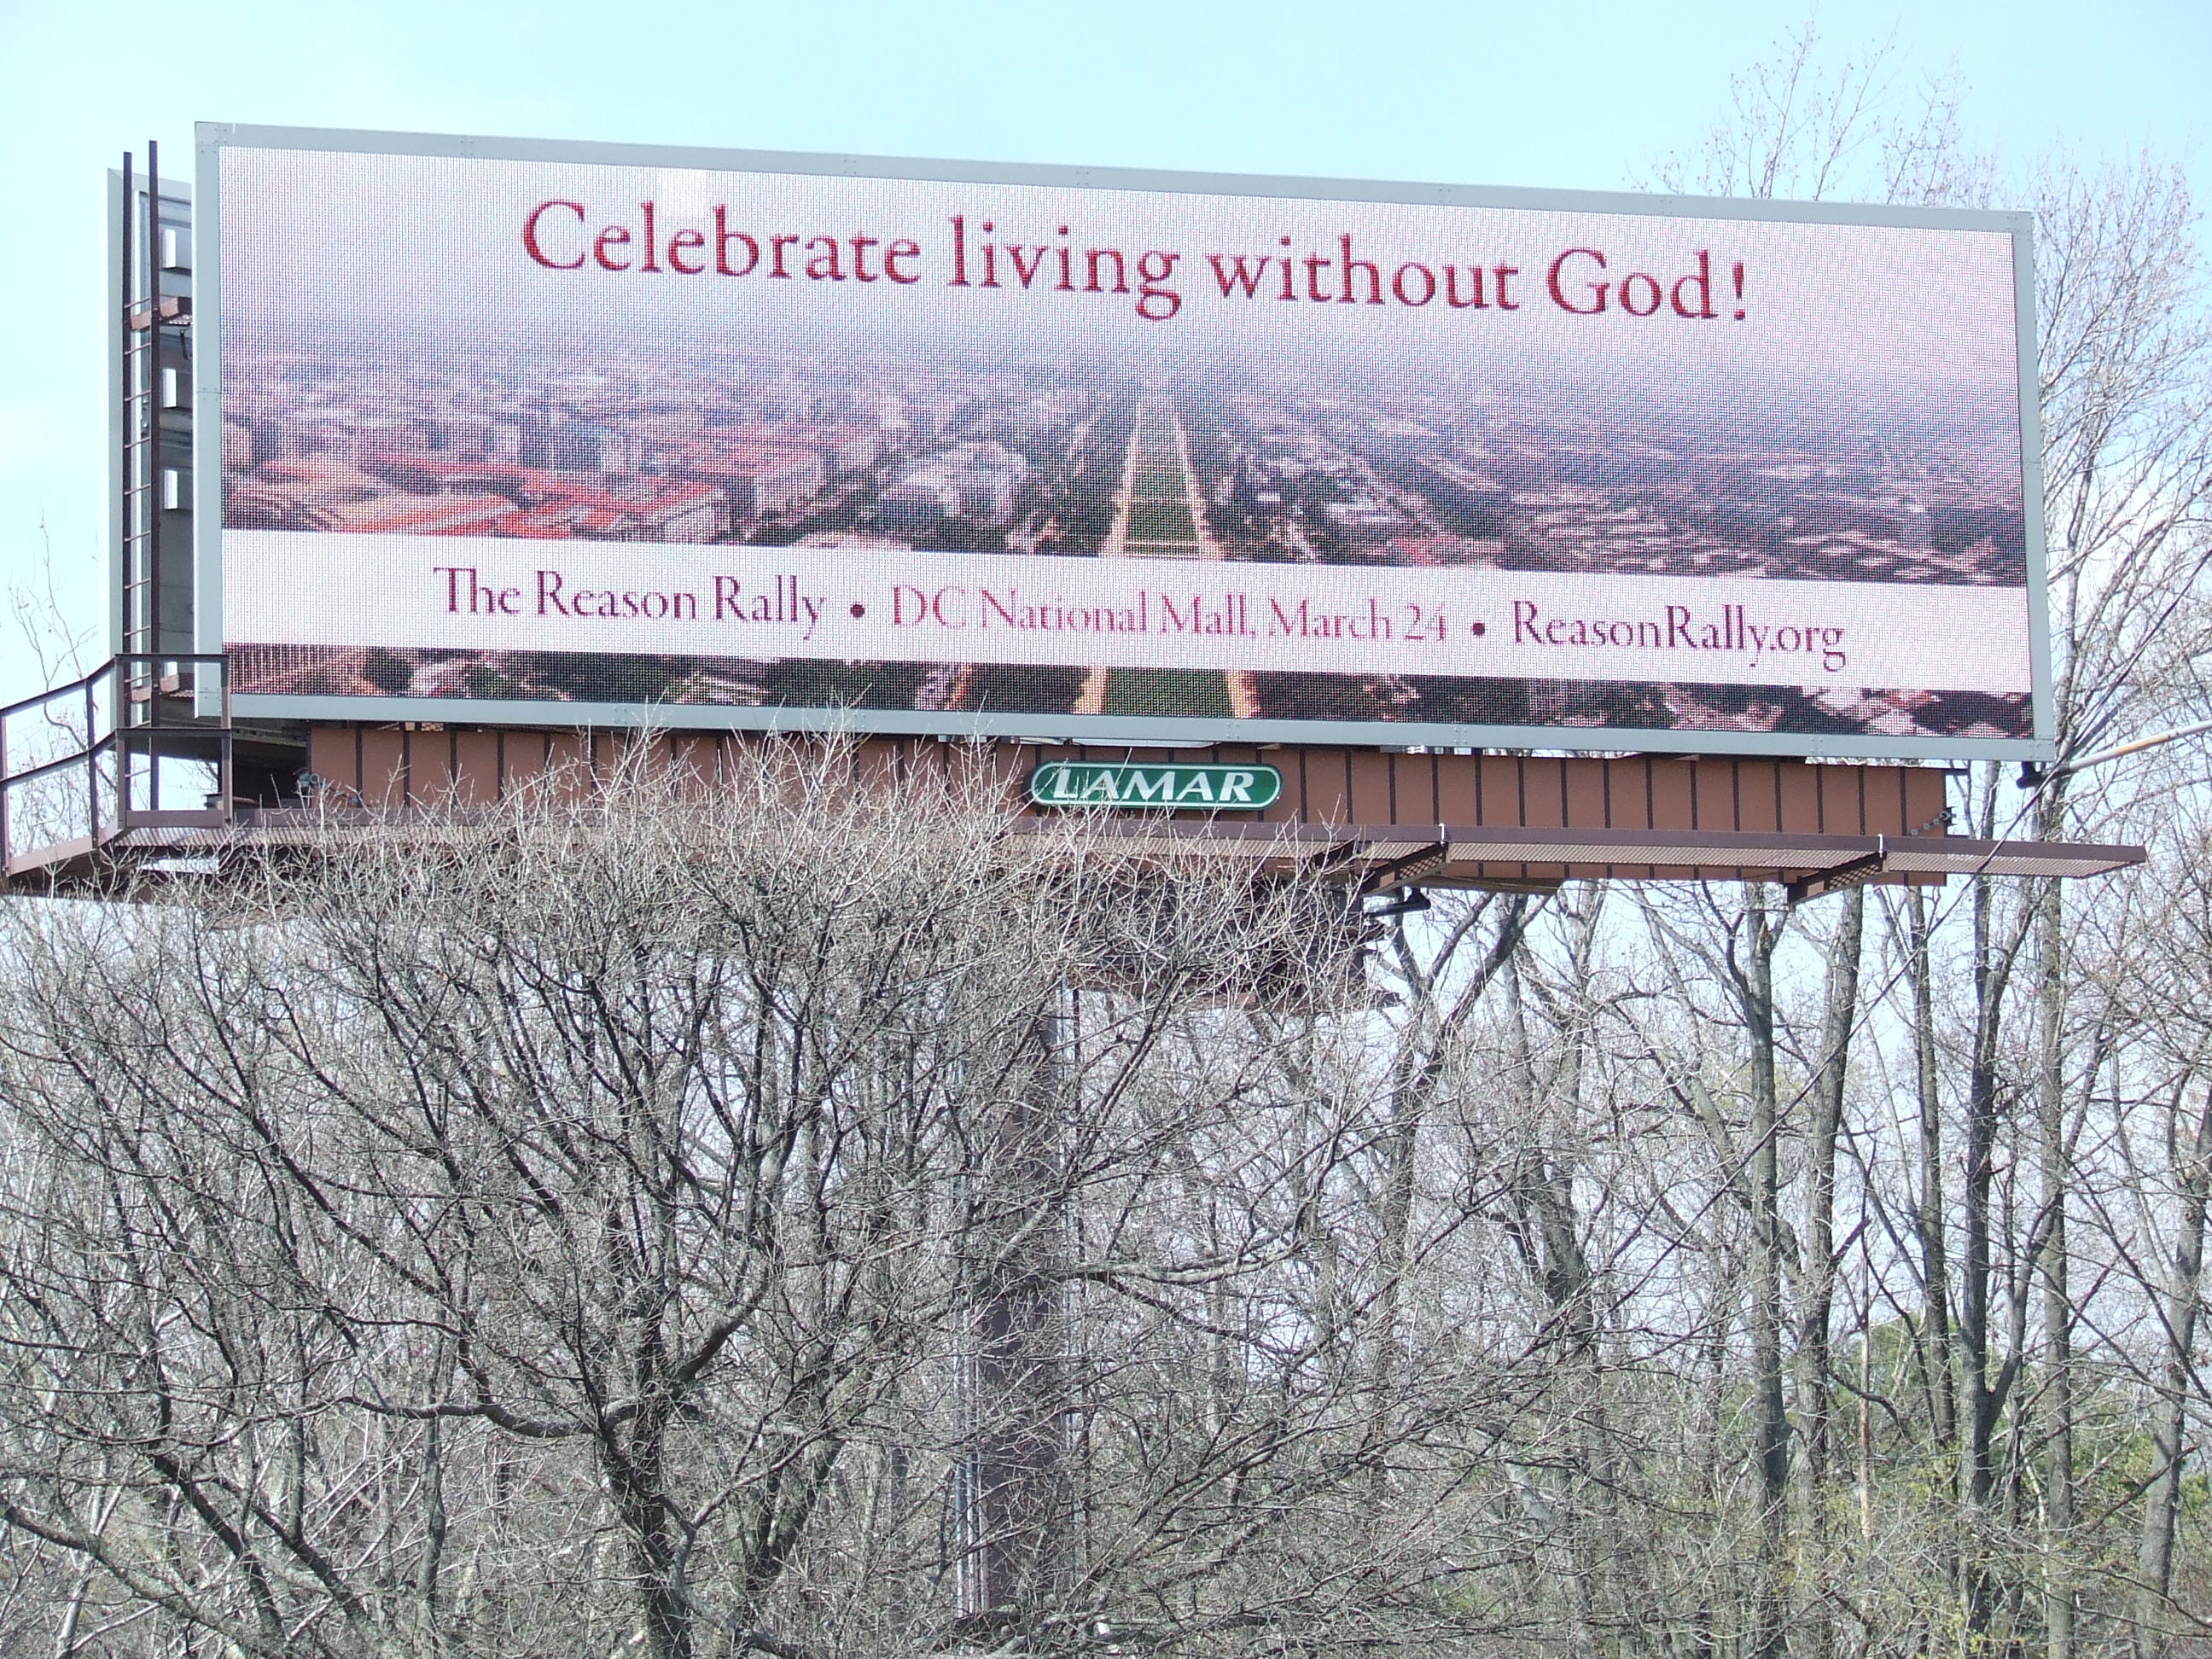 Richmond Billboard Promotes Godless Rally